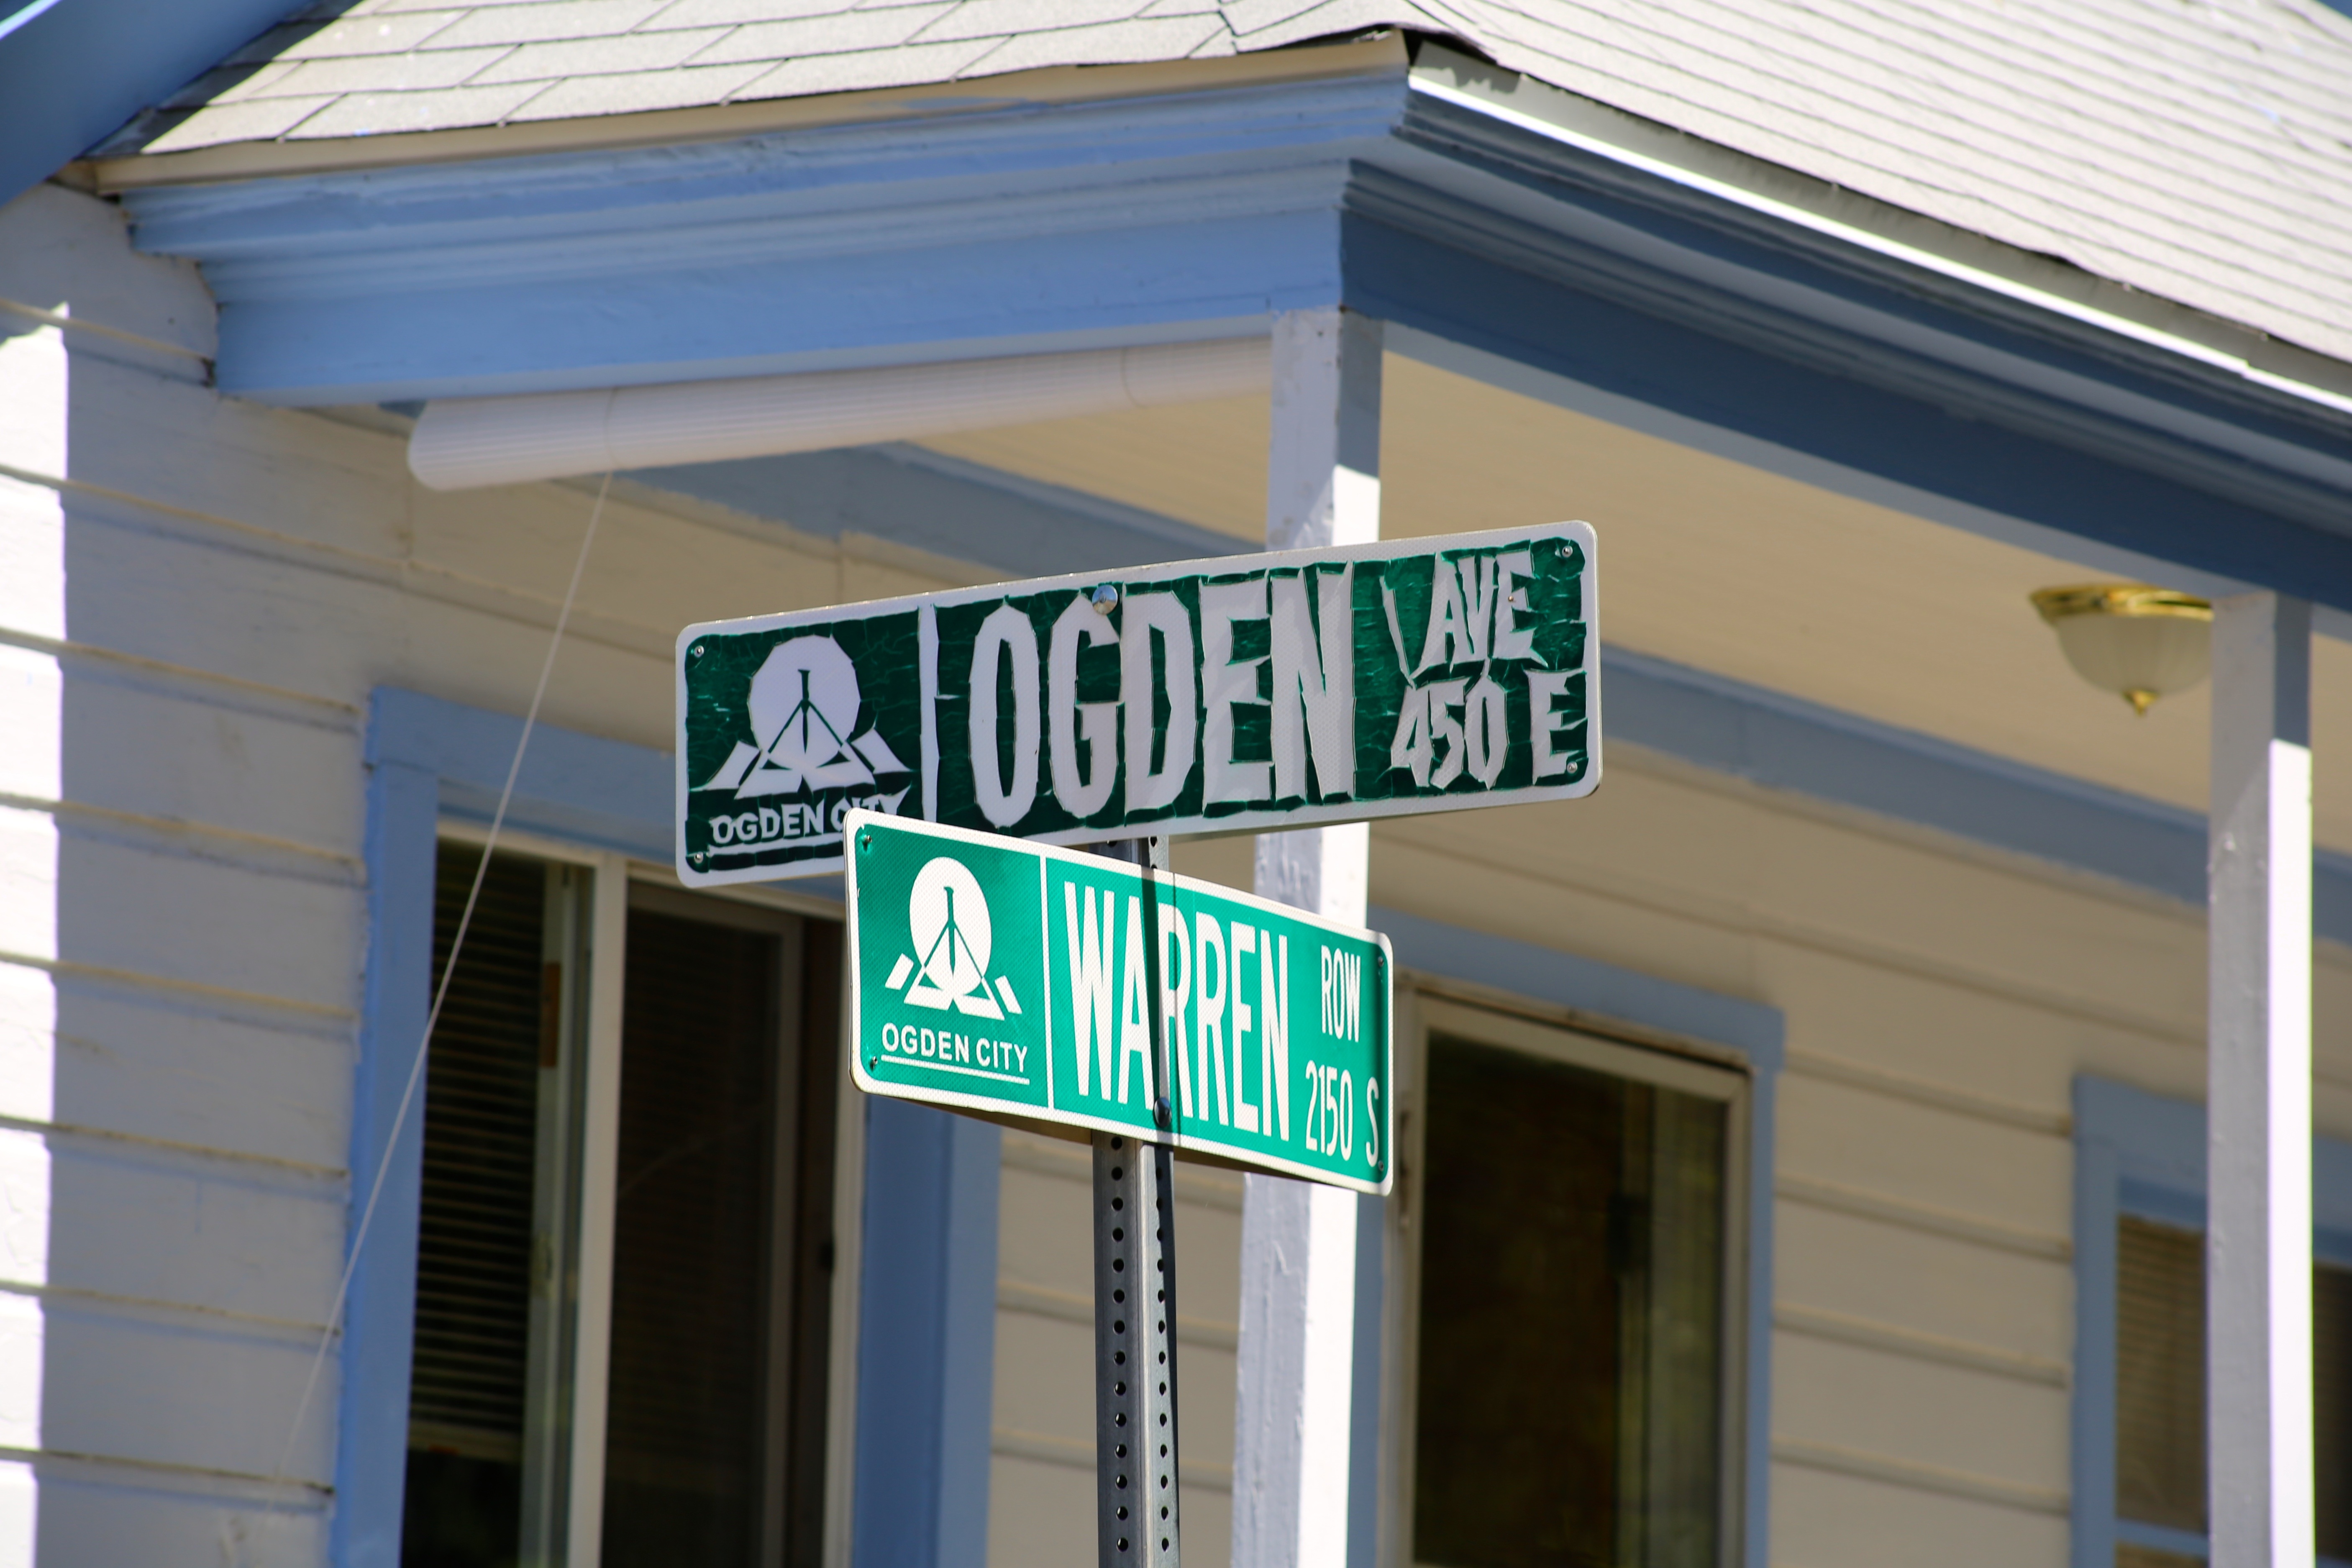 Green Street знак